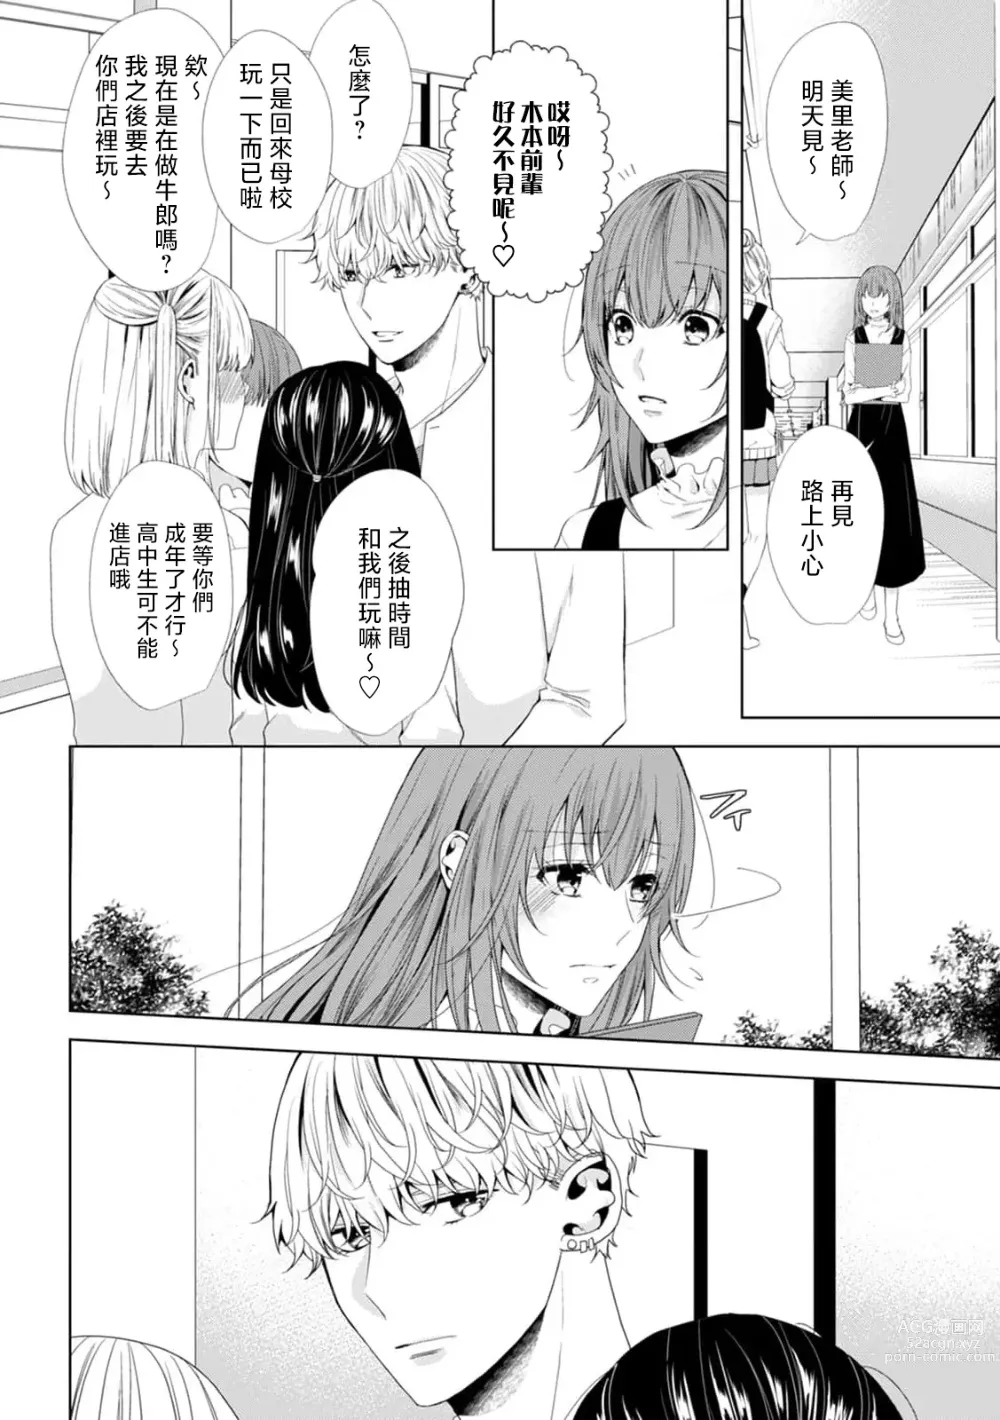 Page 3 of manga 性交摄影什么的明明不可以…却忍不住高潮了！